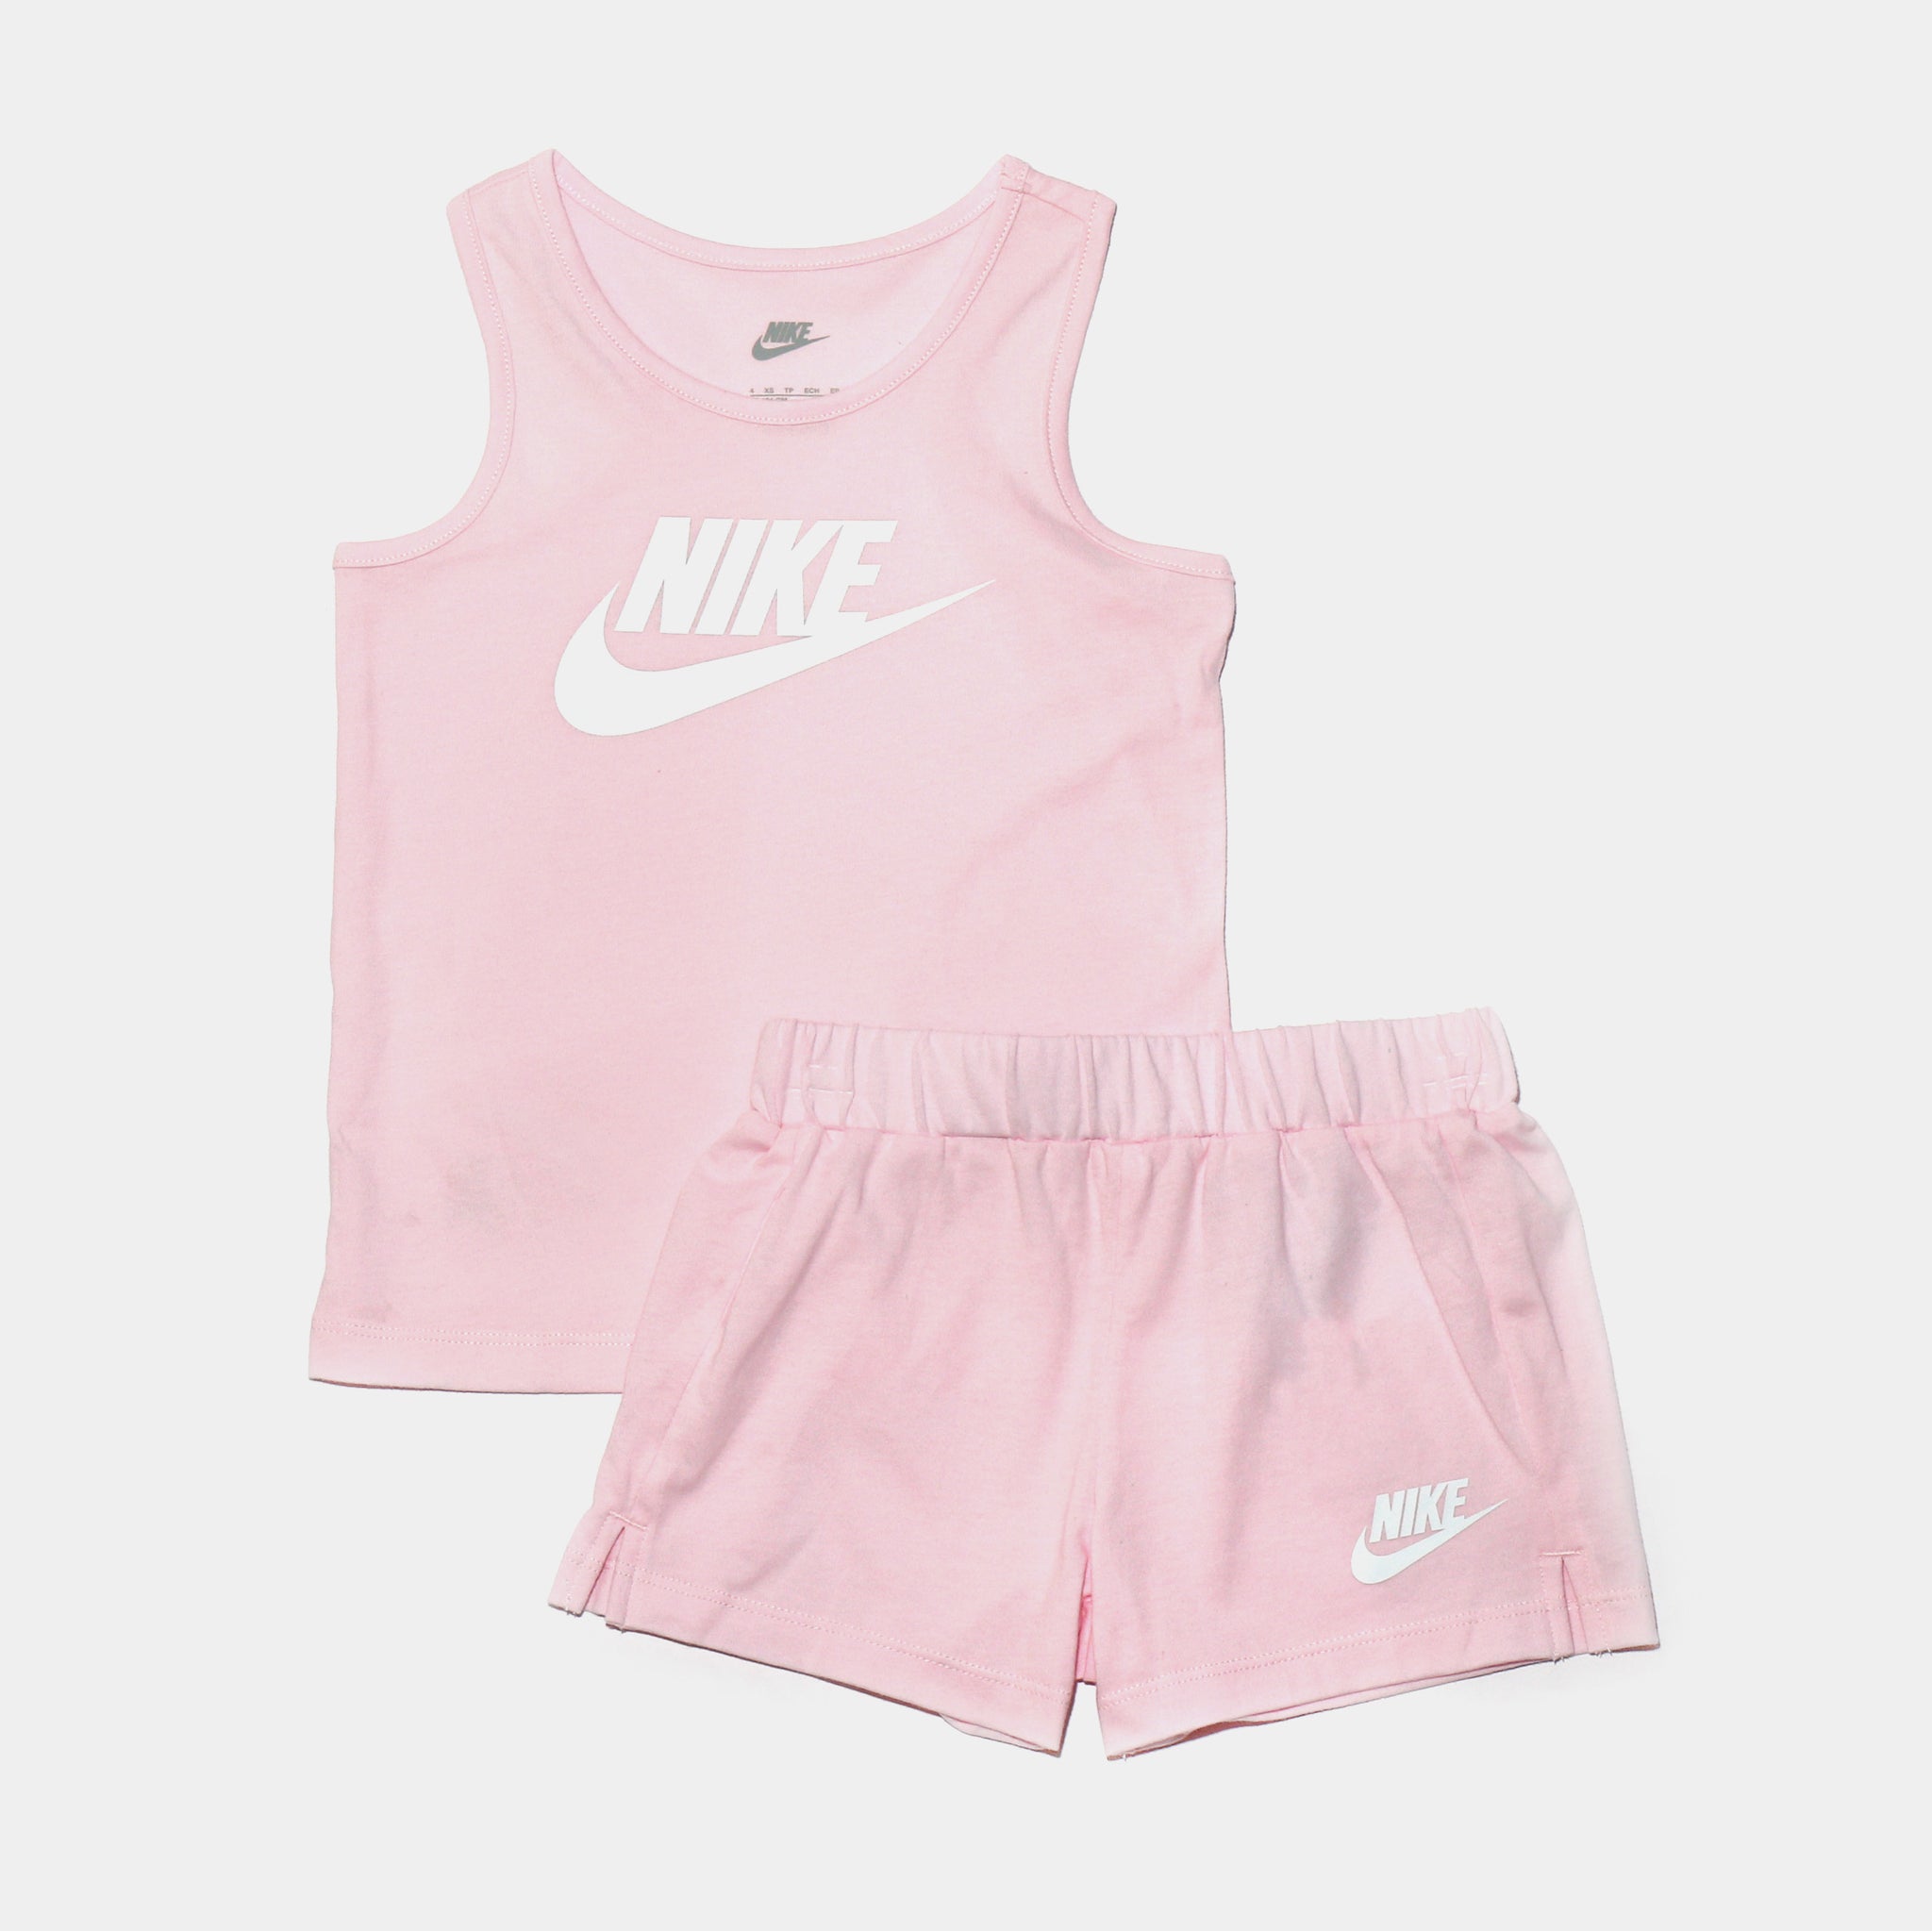 Nike Jersey Tank and Short Set Preschool Set Pink 36J438-A9Y